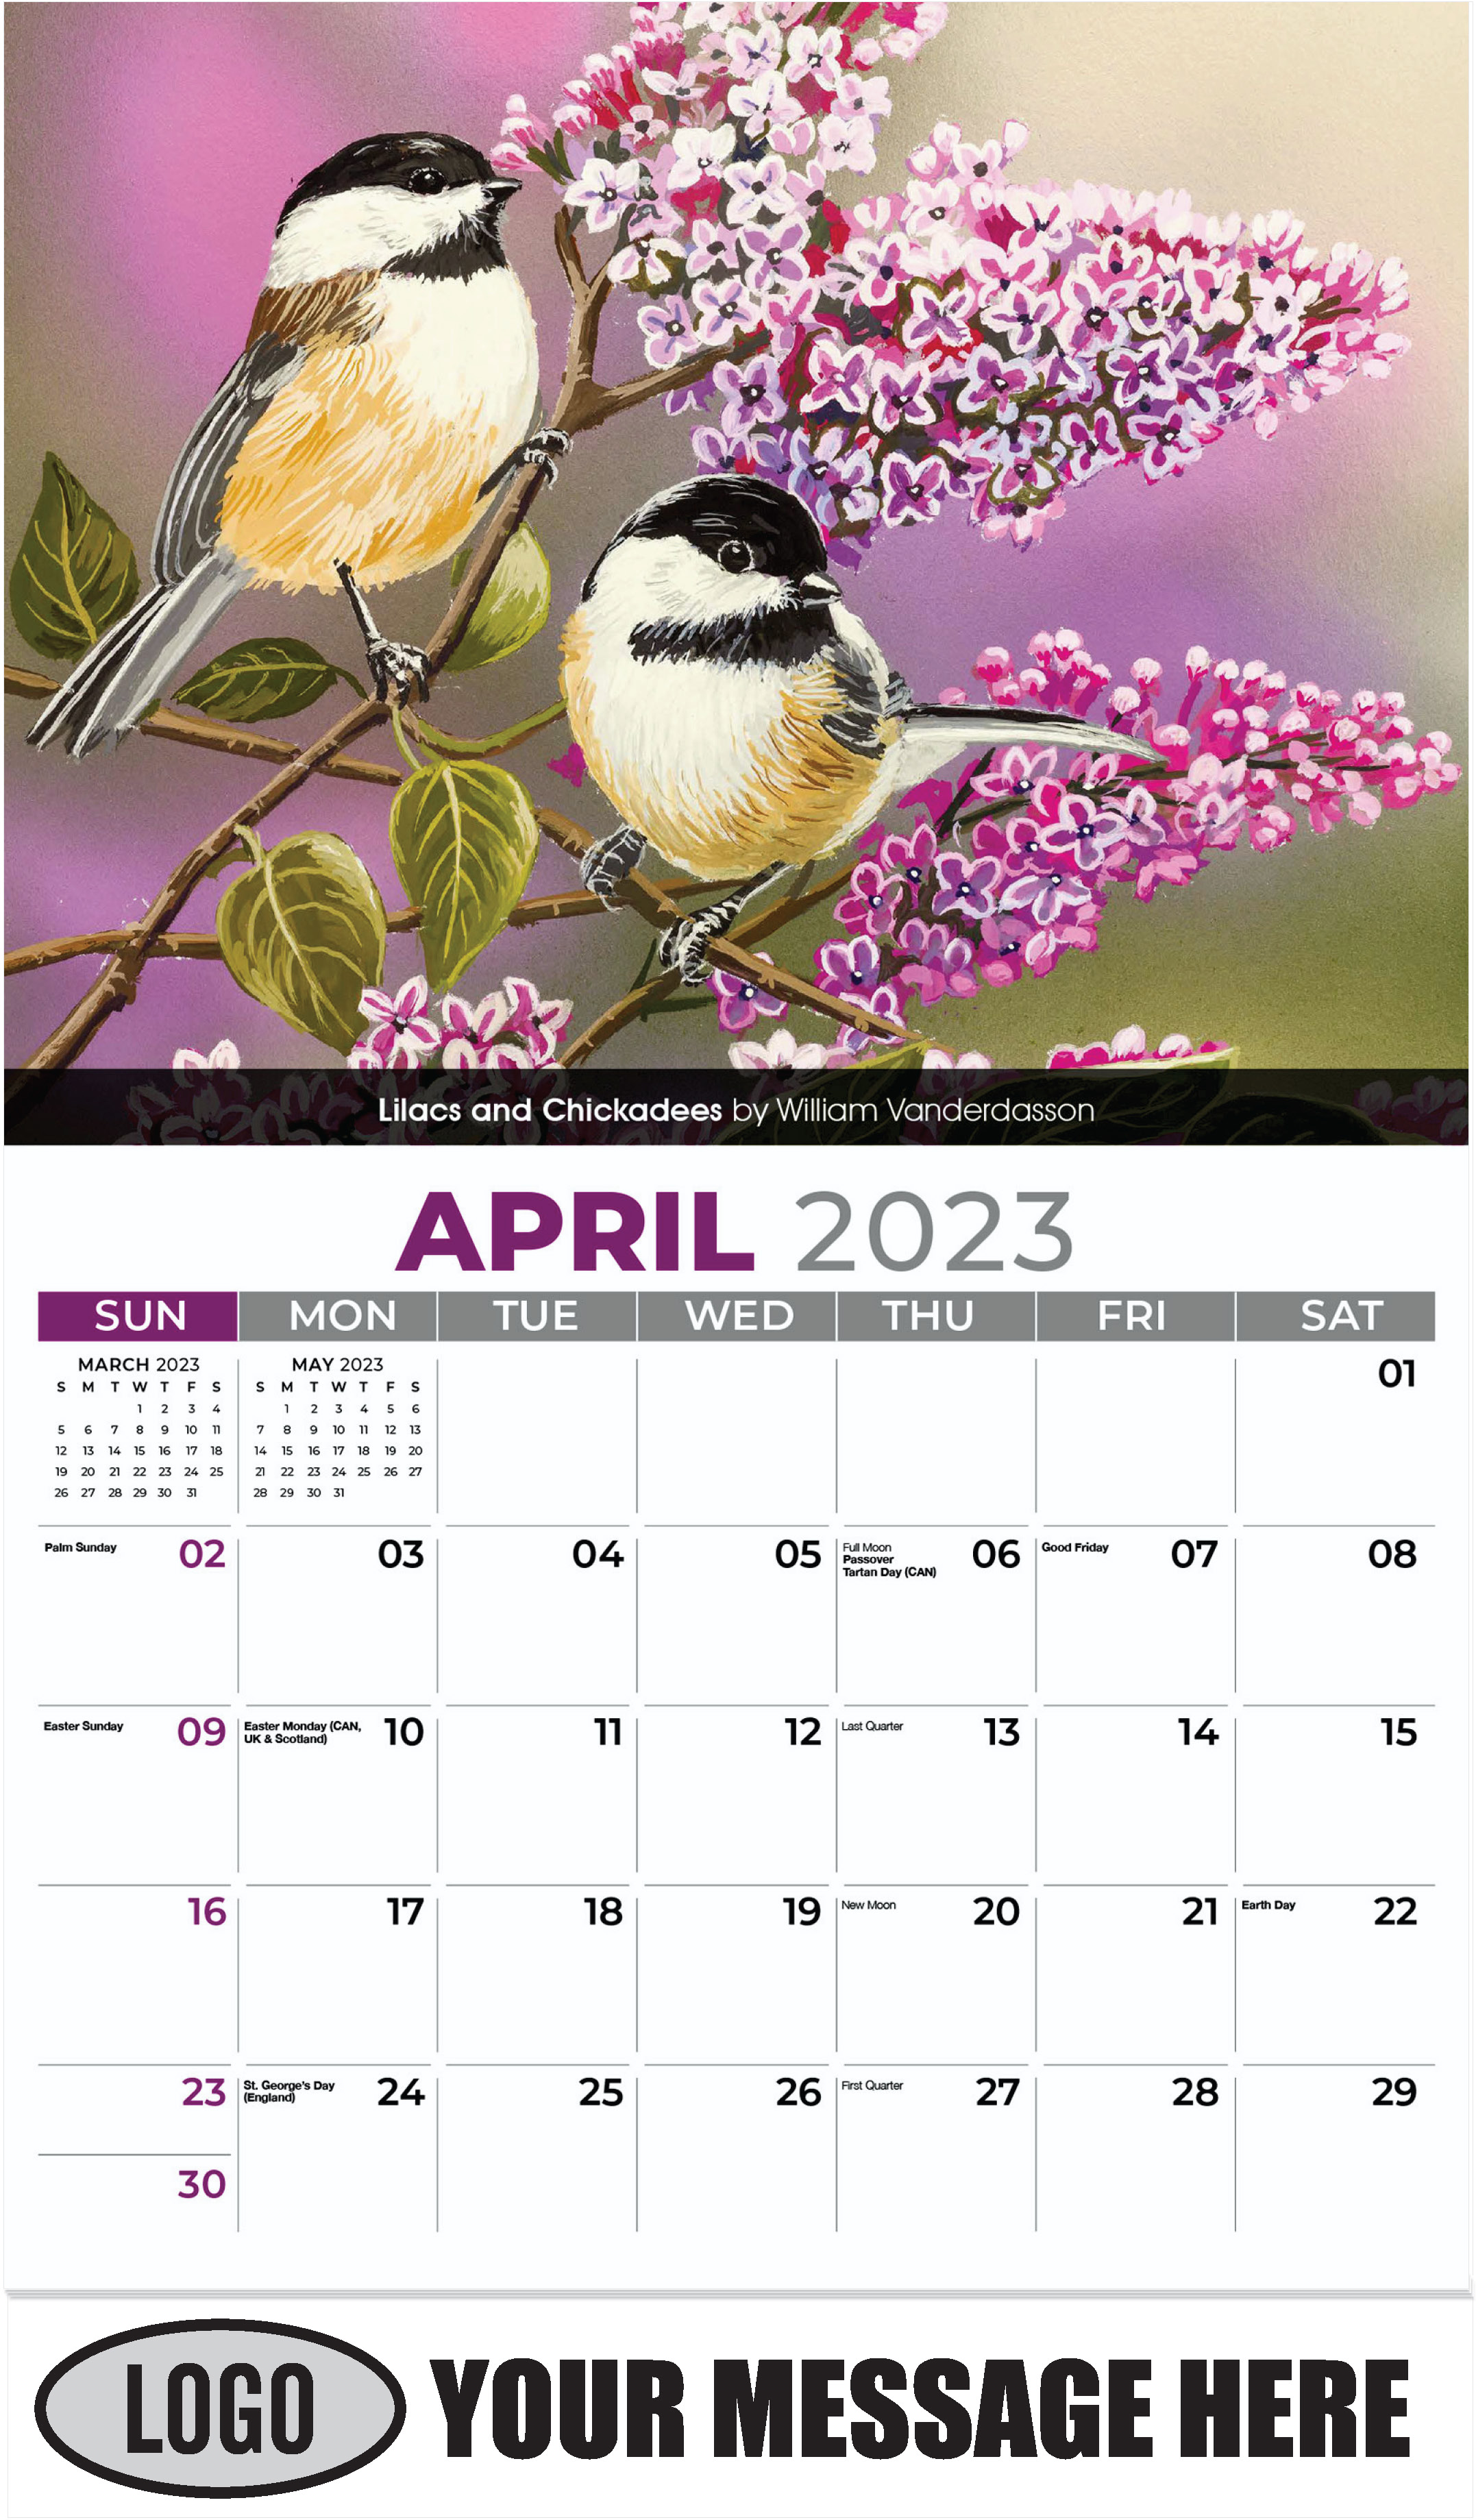 Lilacs and Chickadees by William
Vanderdasson
 - April - Garden Birds 2023 Promotional Calendar